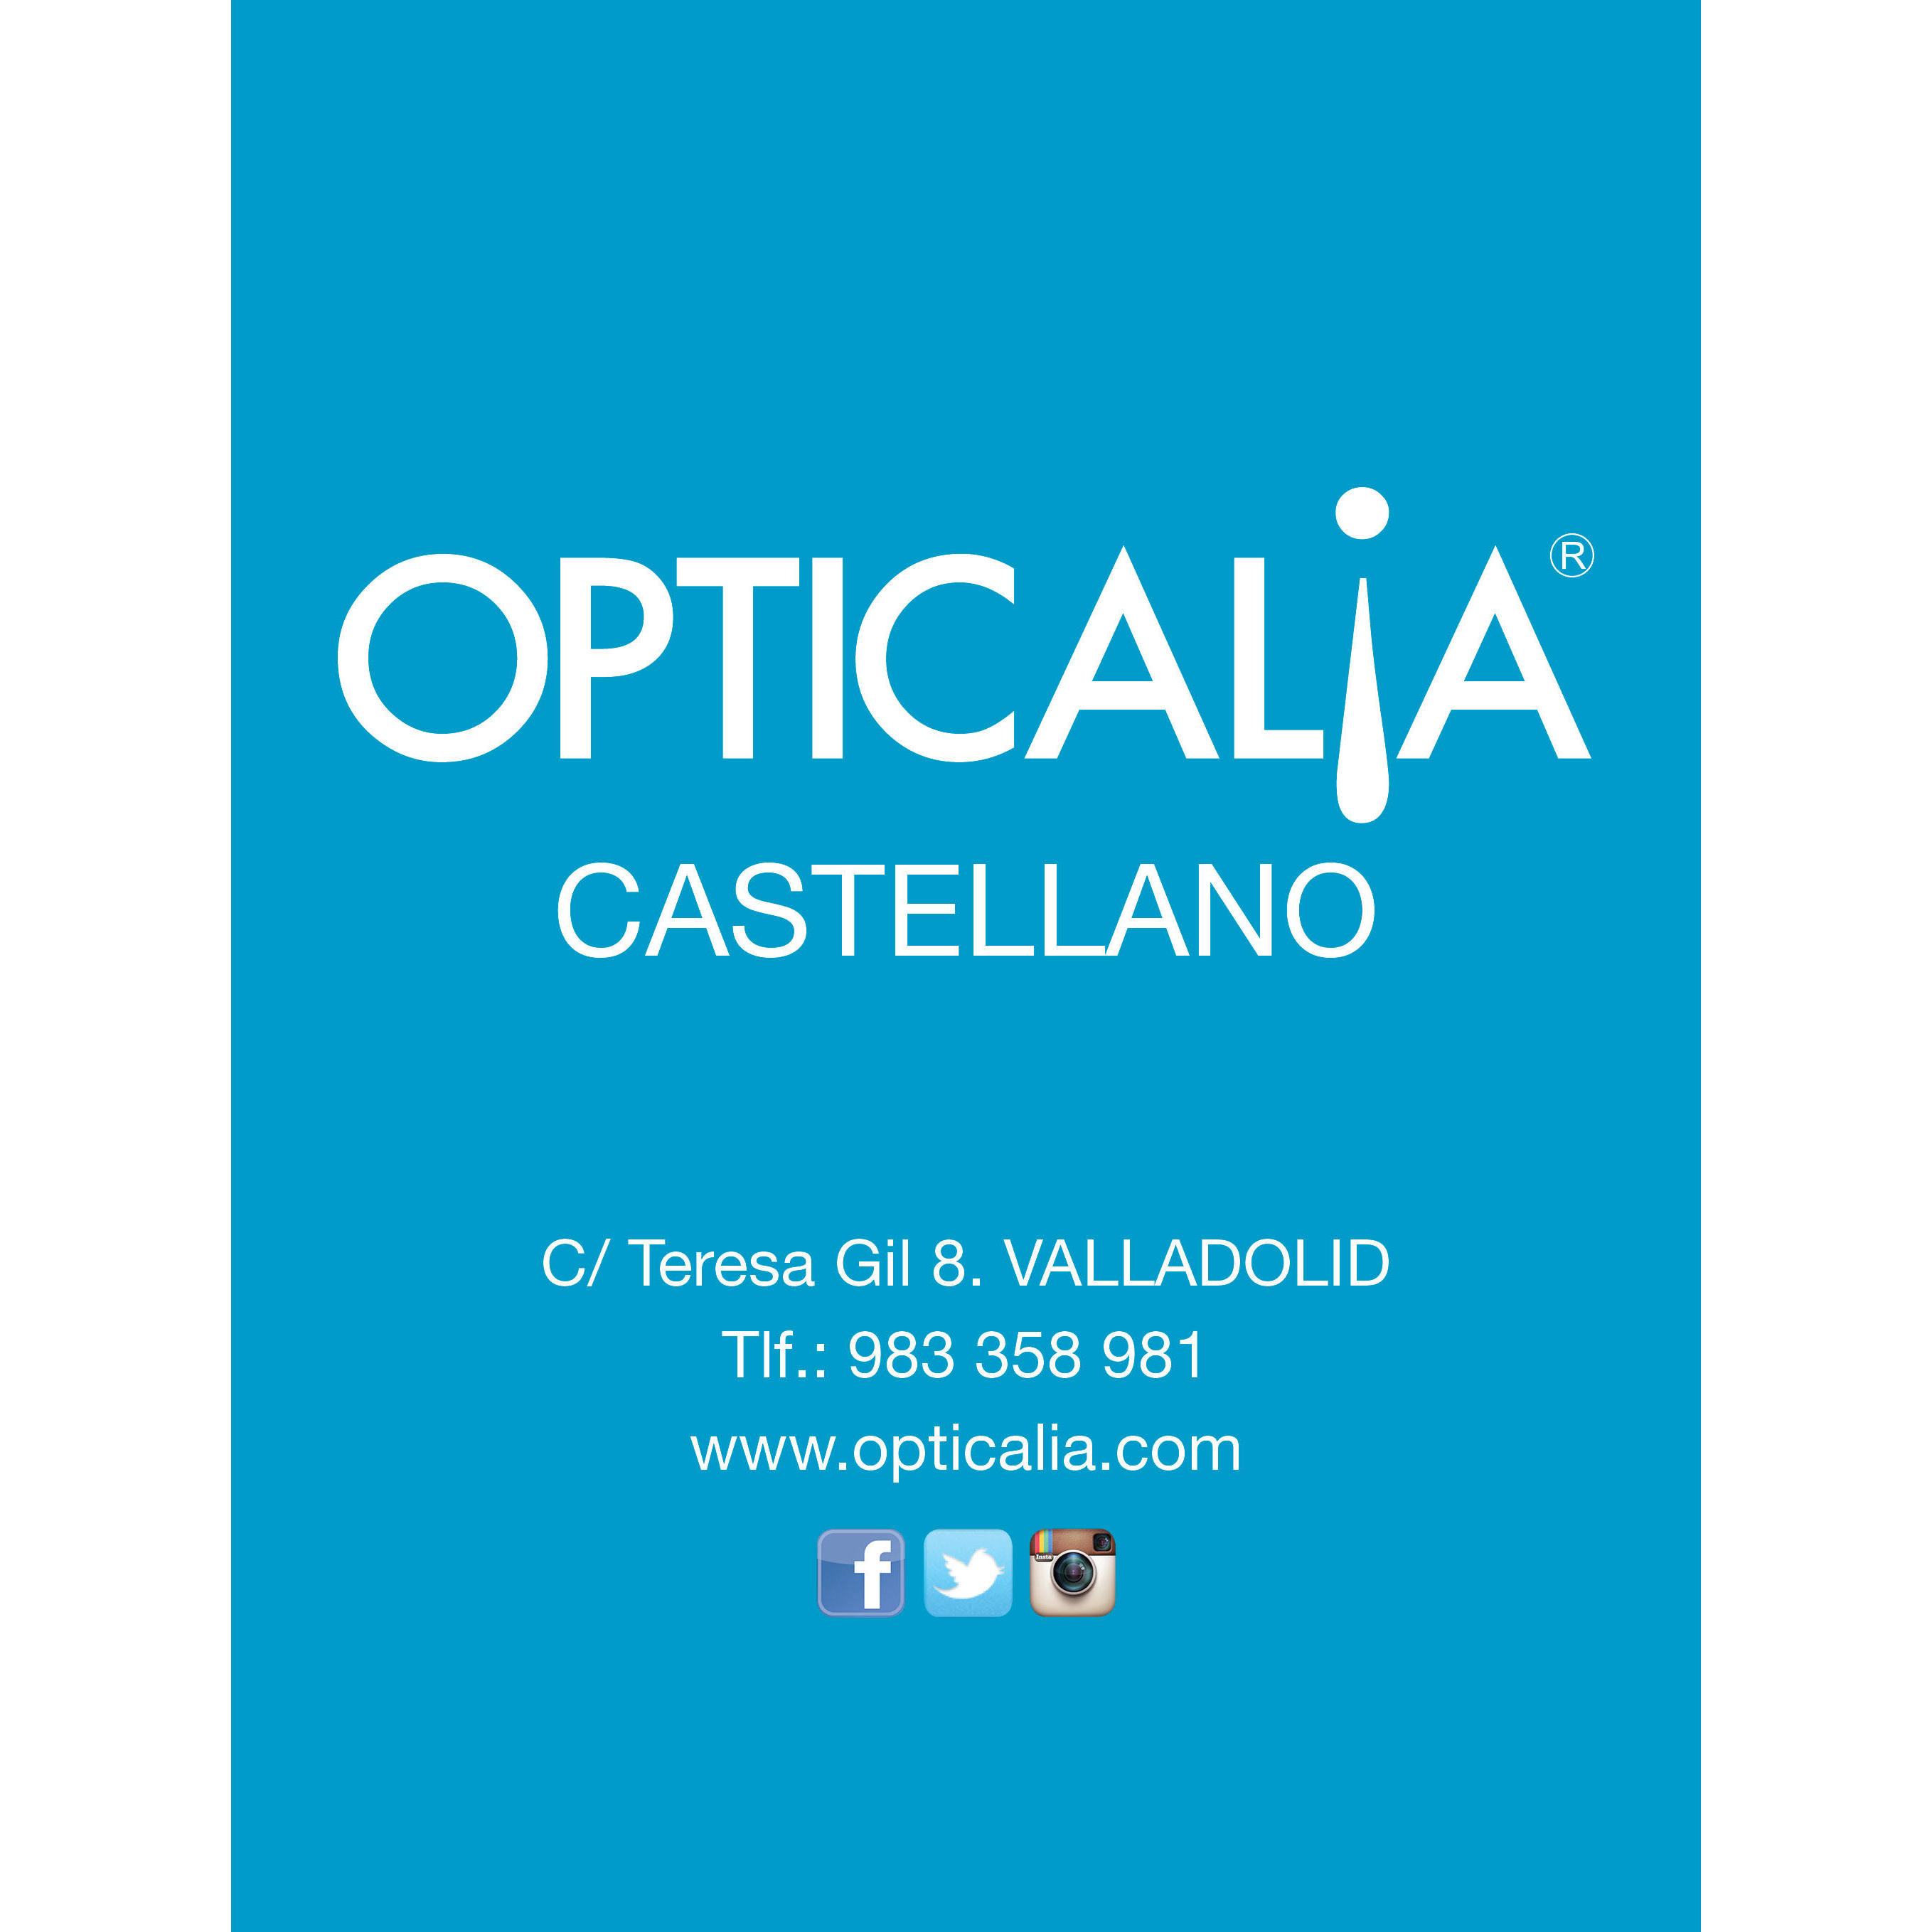 Opticalia Castellano Logo